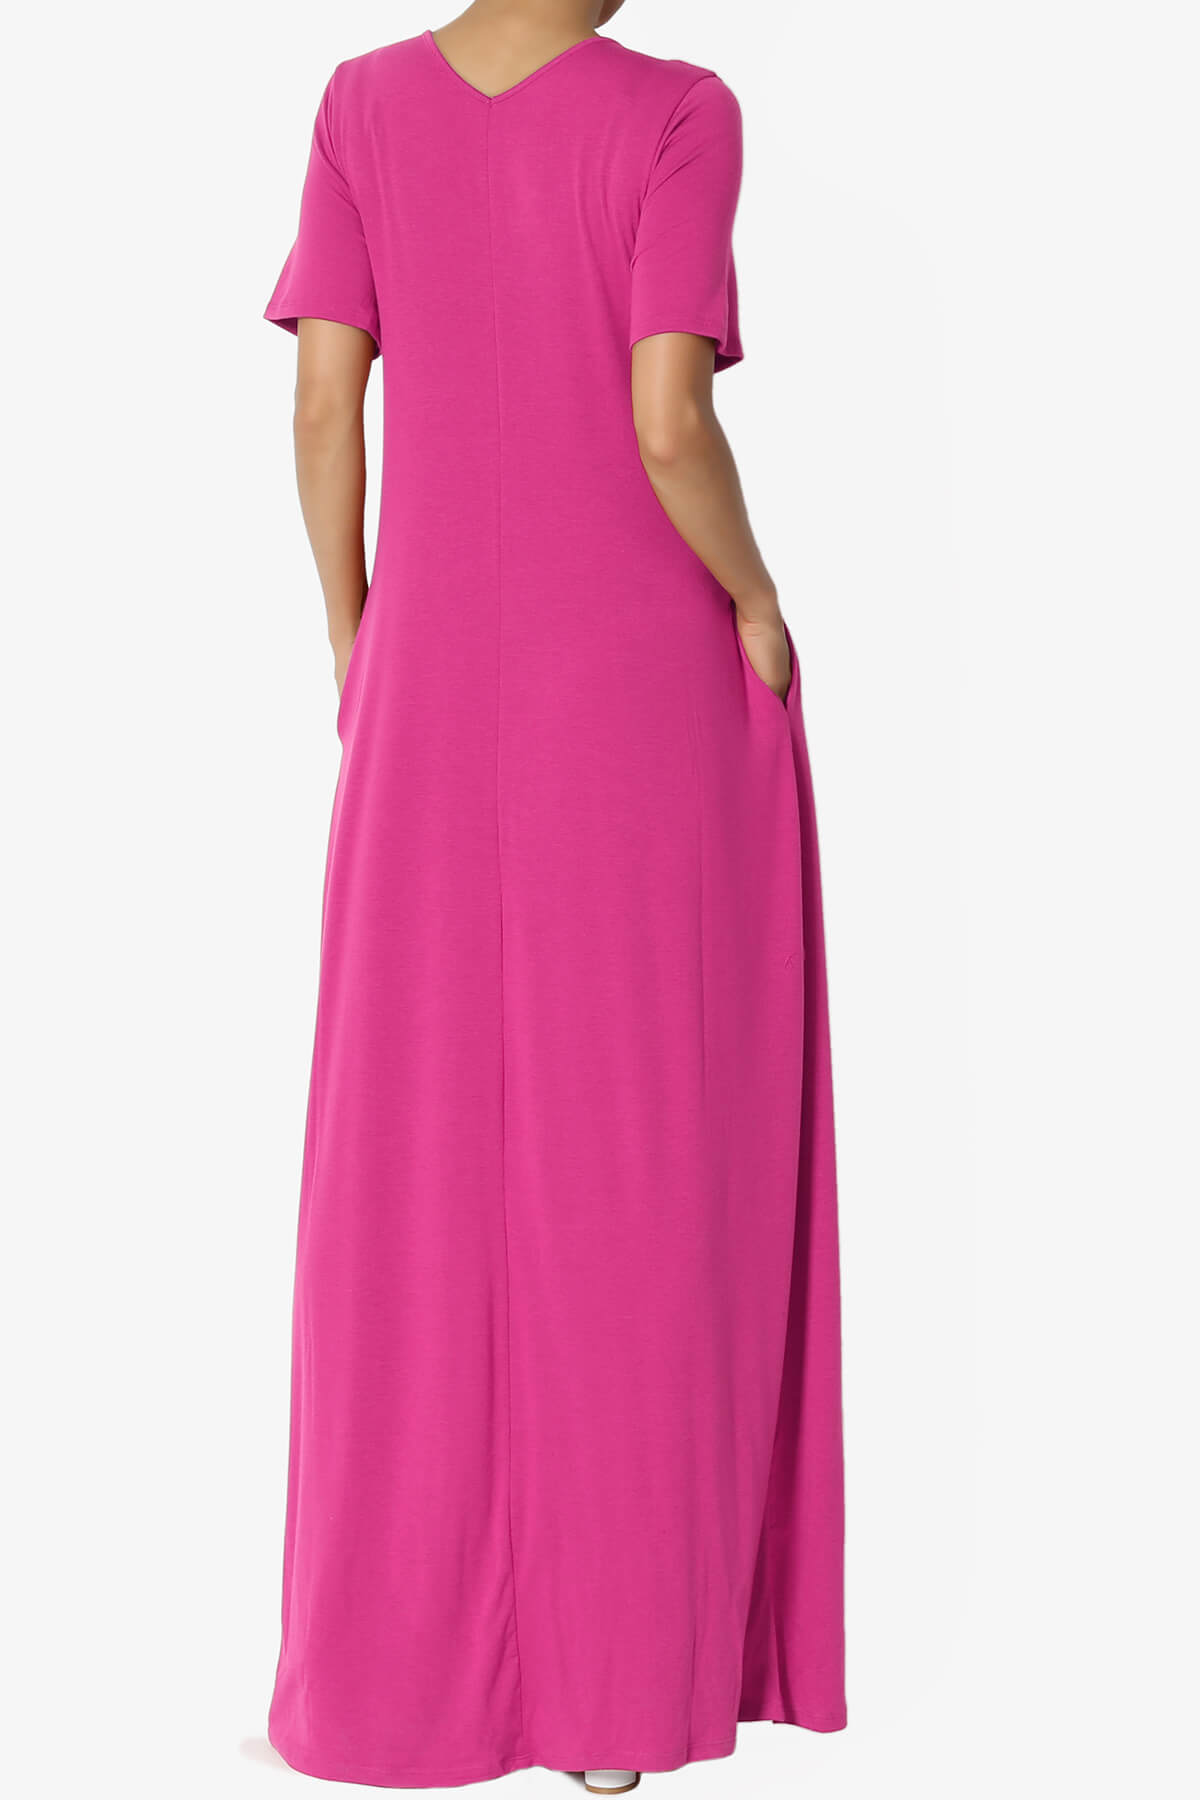 Vina Pocket Oversized Maxi Dress HOT PINK_2